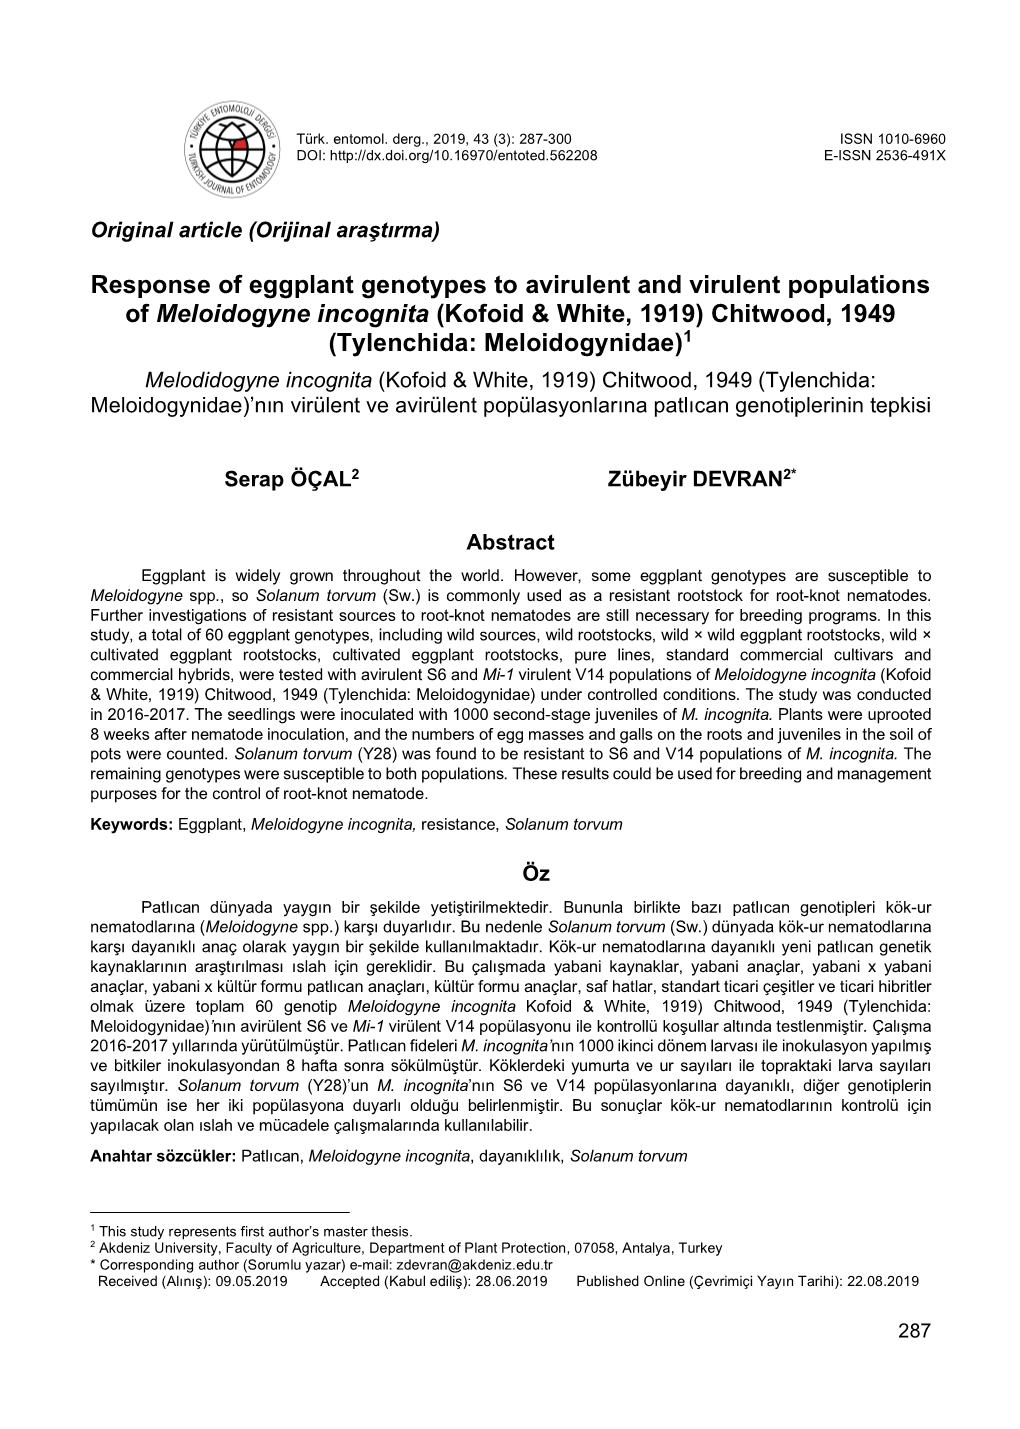 Response of Eggplant Genotypes to Avirulent and Virulent